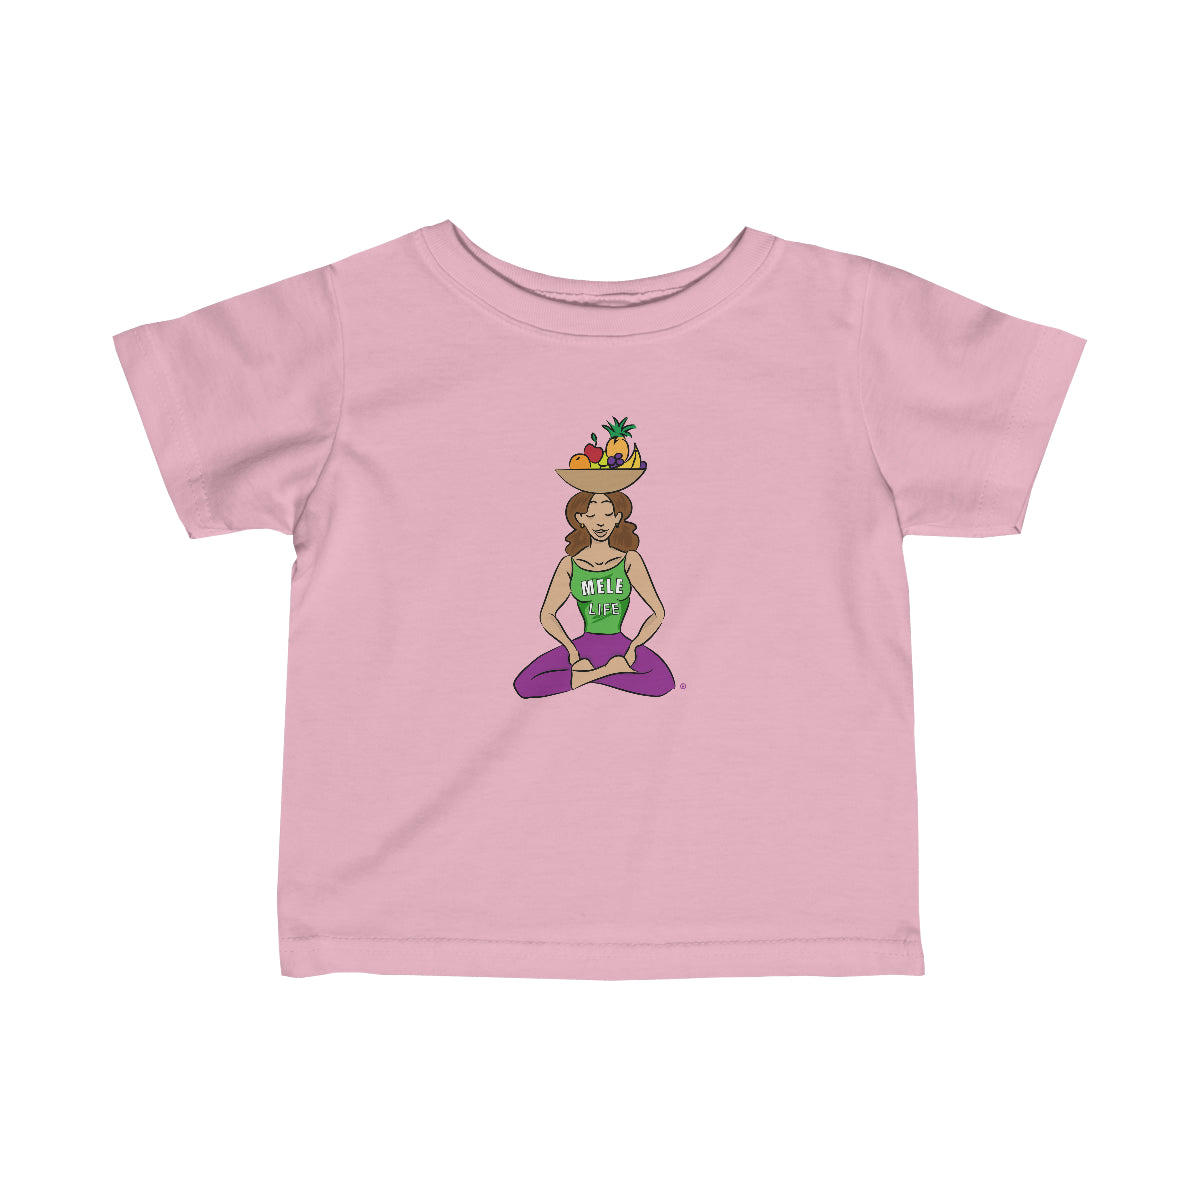 Infant Tee - Yoga Lady1